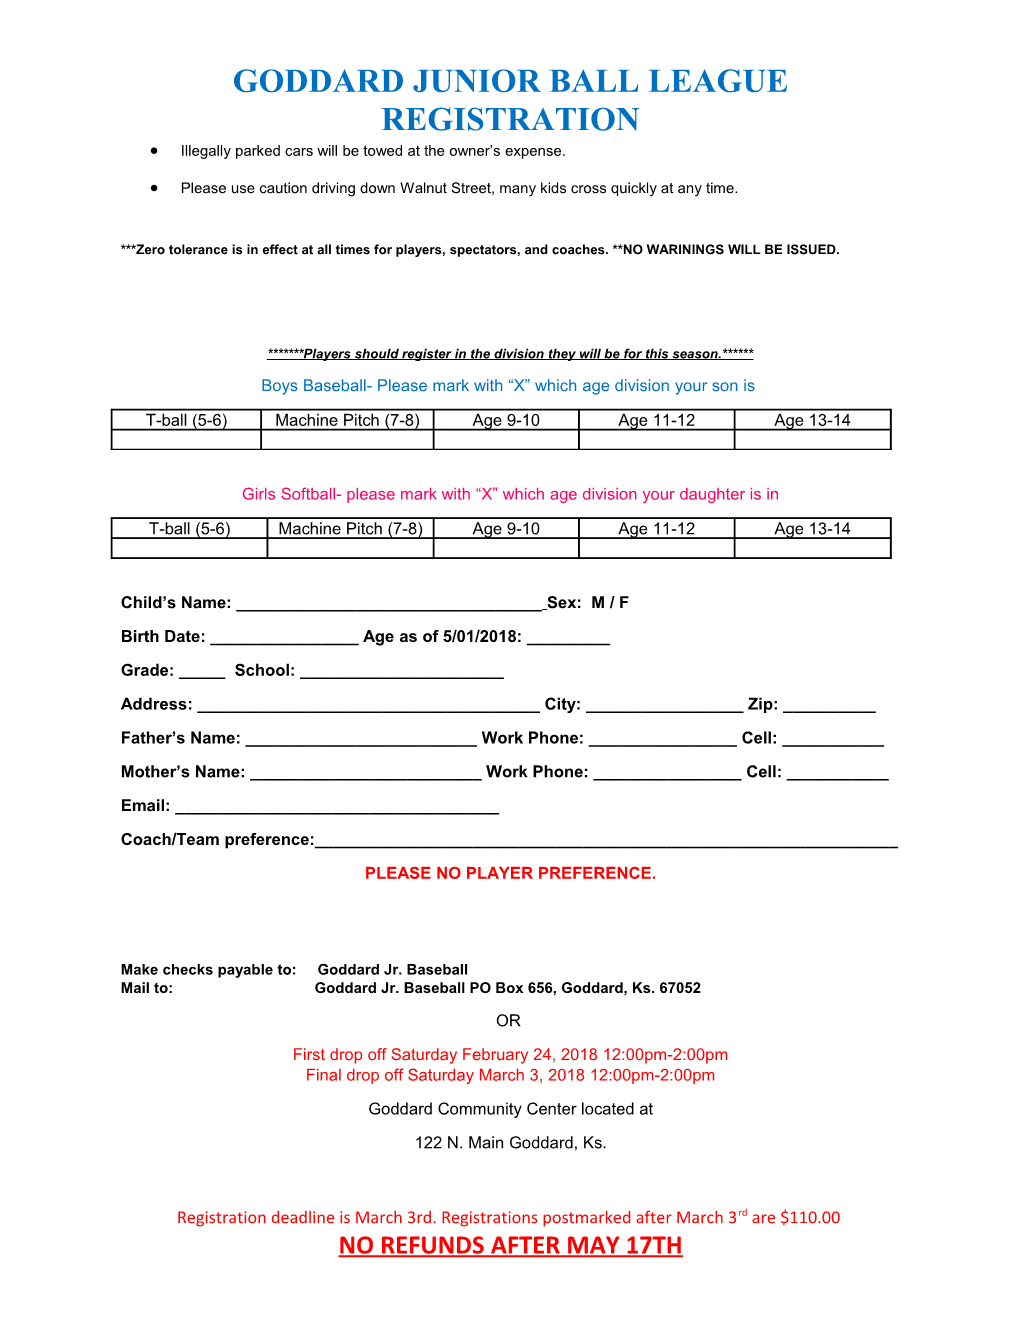 Goddard Junior Ball League Registration